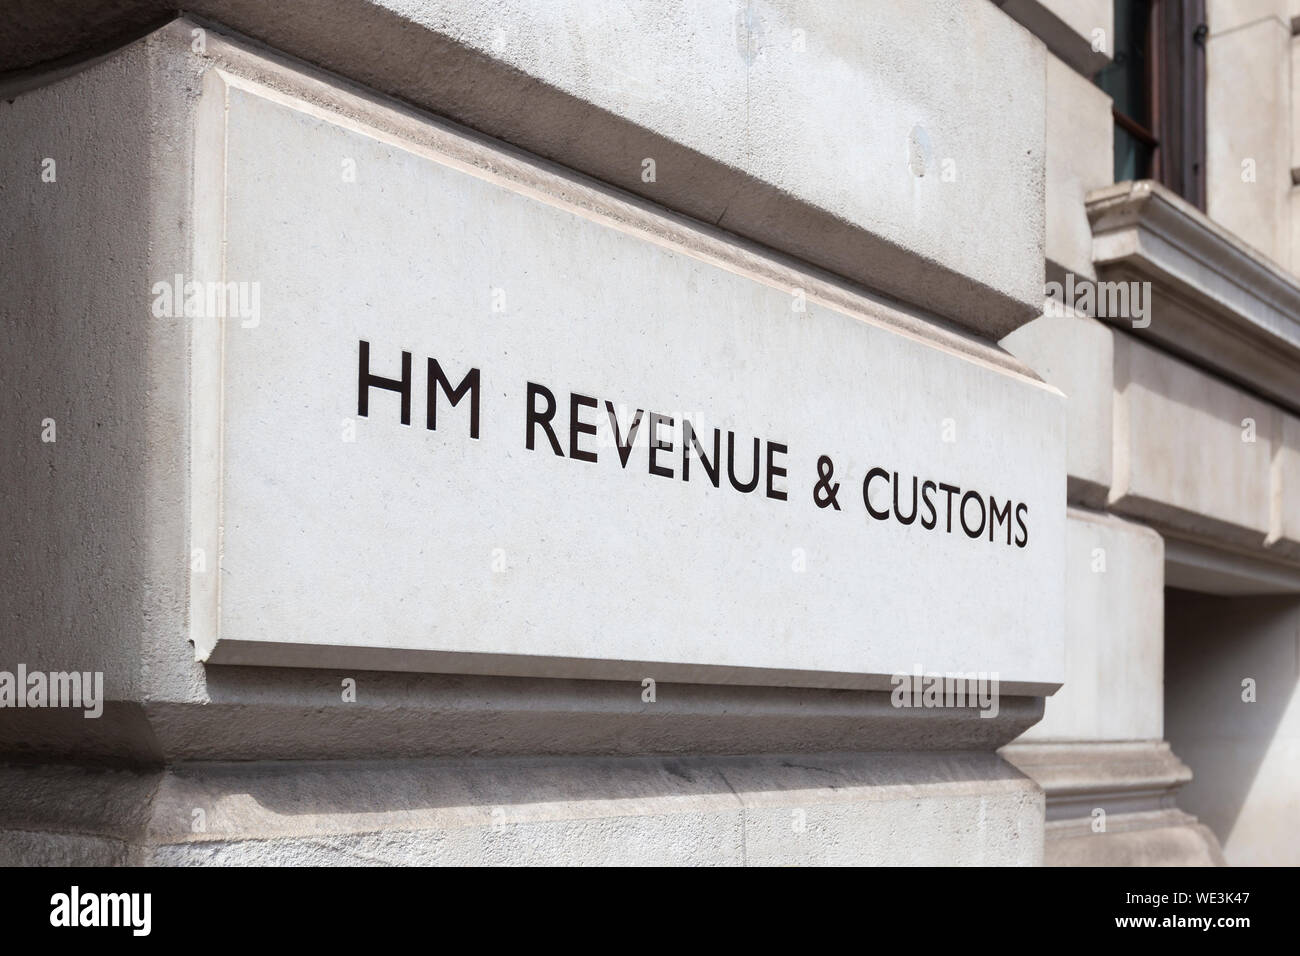 HM Revenue & Customs sign, London, England, UK Stock Photo